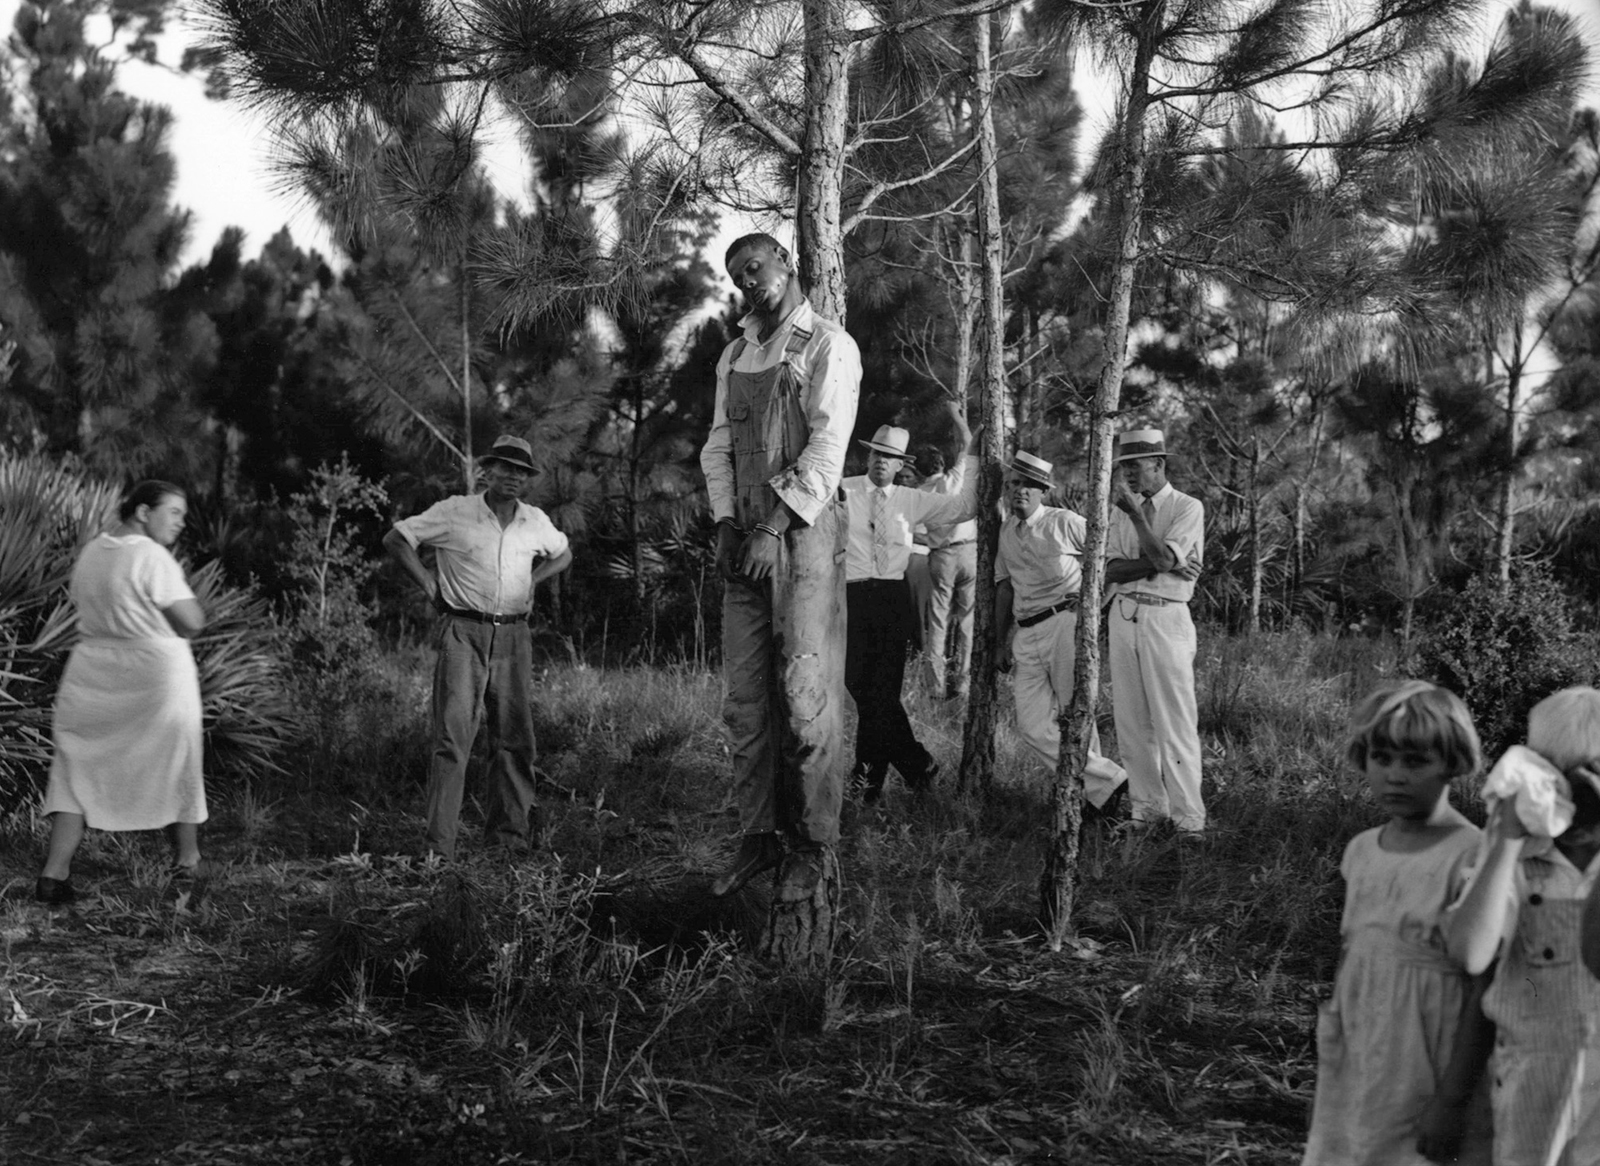 Rubin-Stacy-body-tree-Florida-Fort-Lauderdale-July-19-1935.jpg